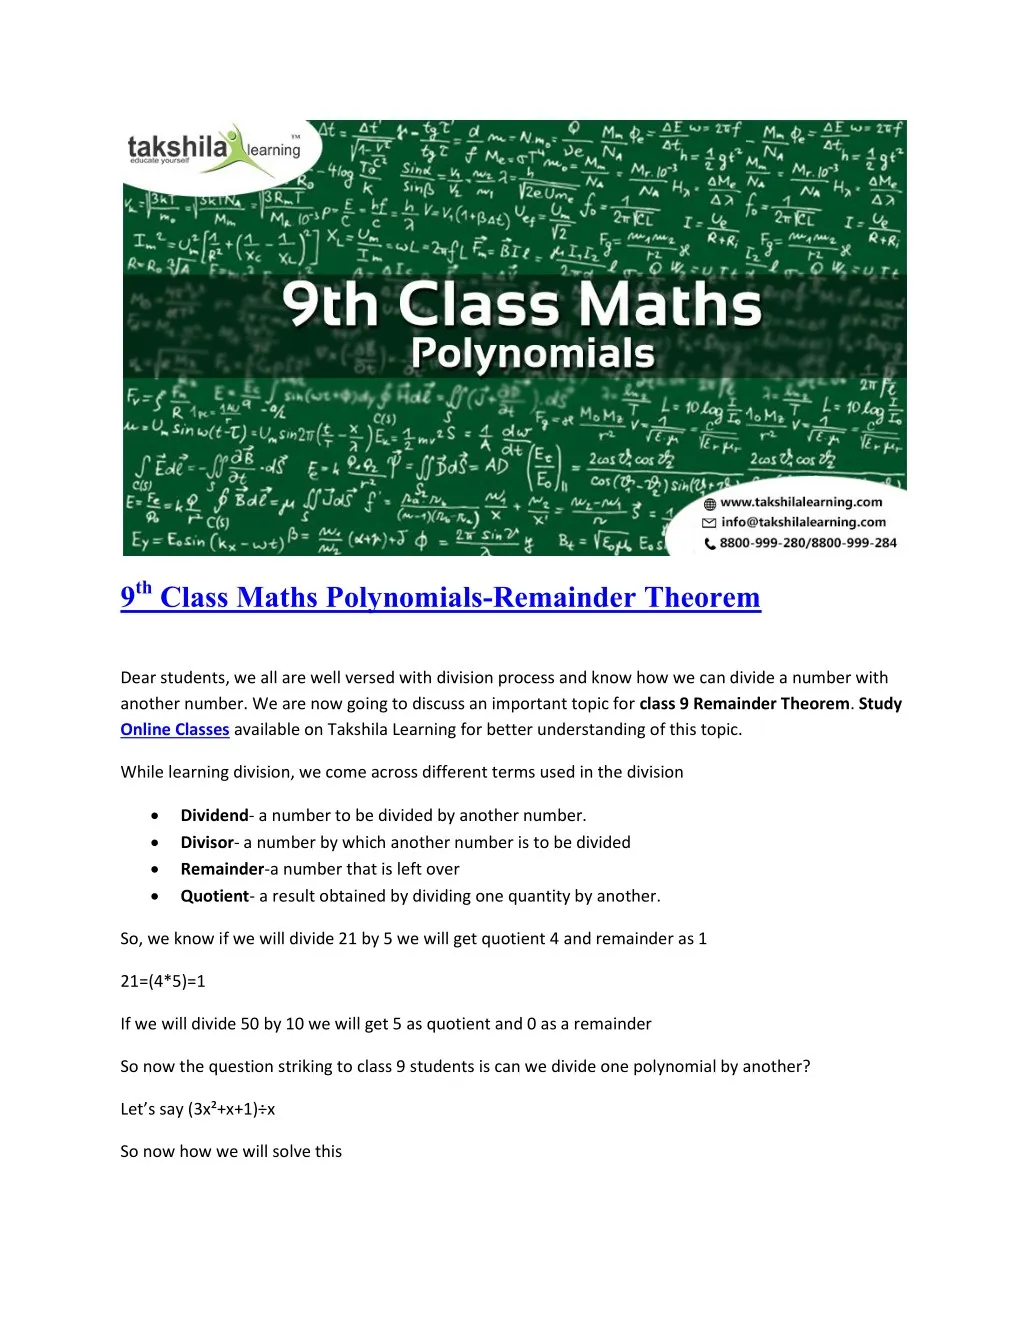 9 th class maths polynomials remainder theorem